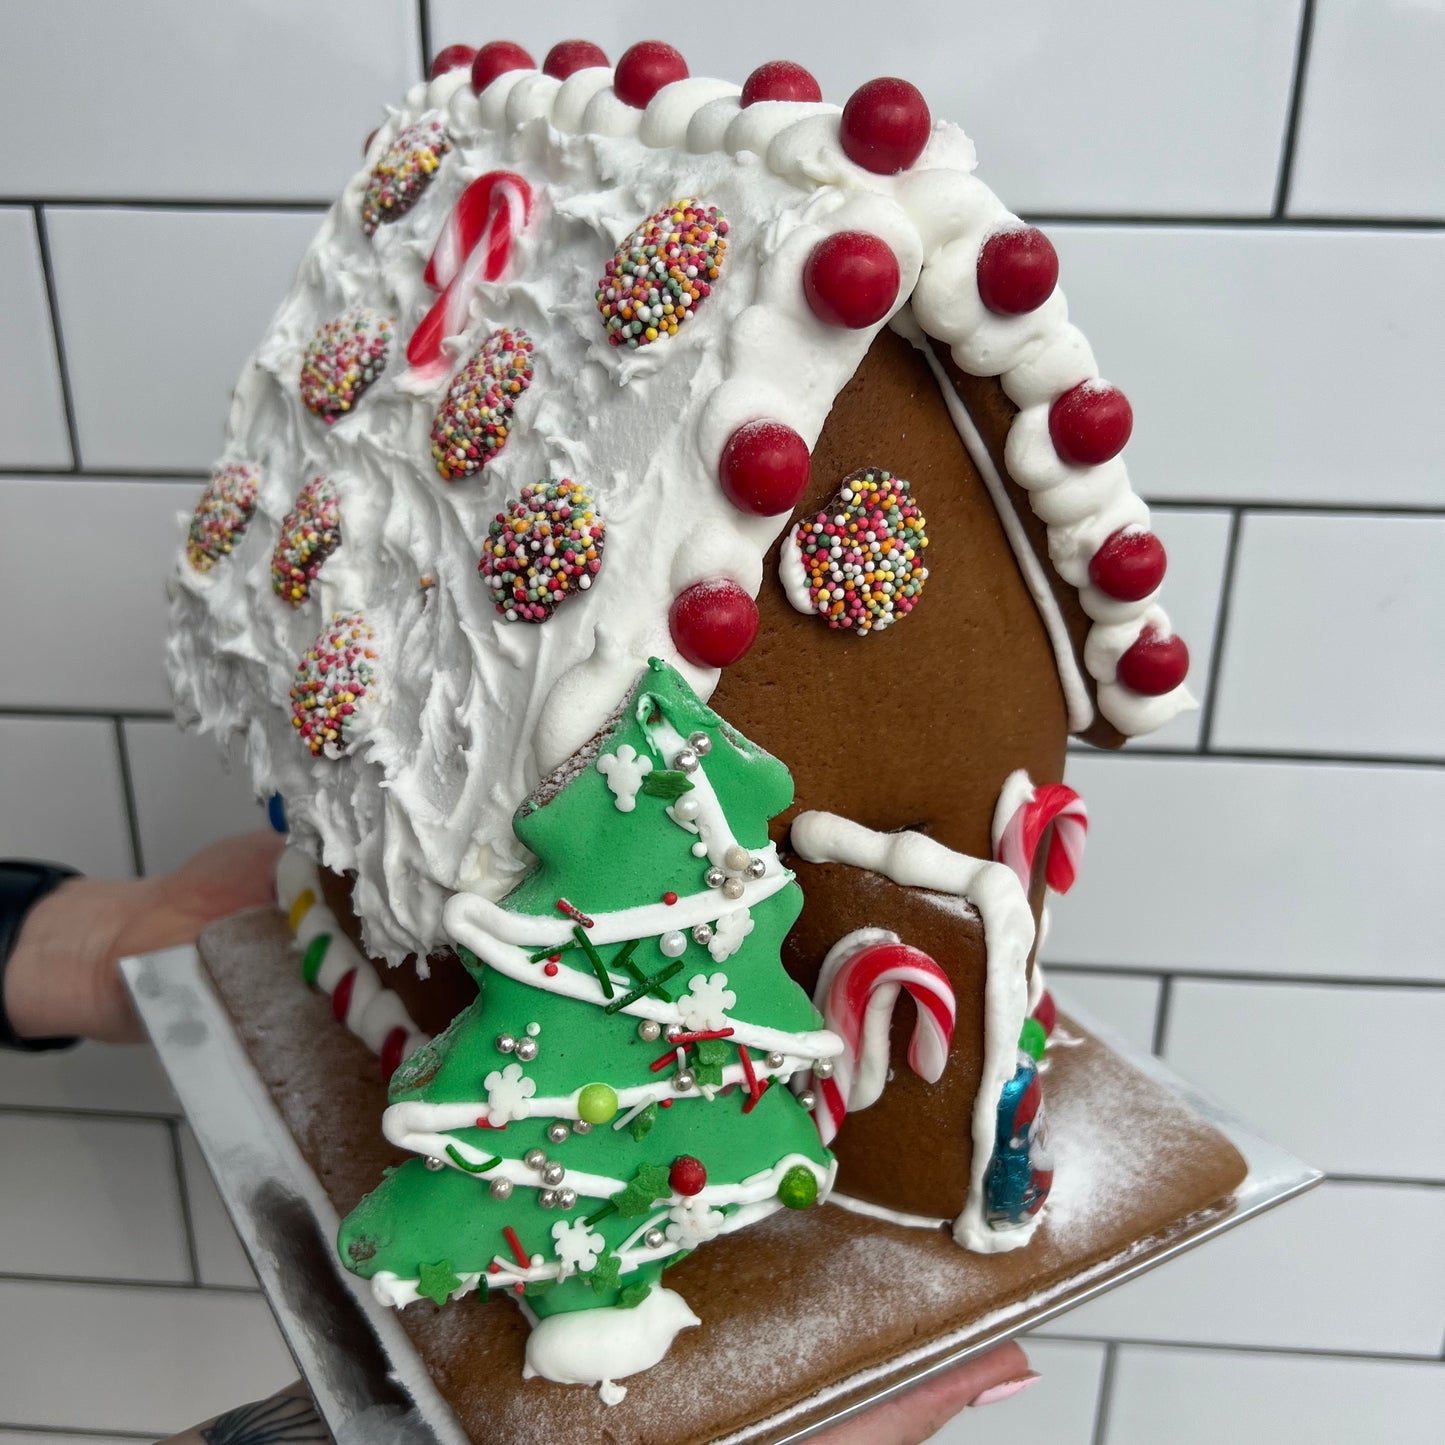 Rick’s Christmas Gingerbread House Each